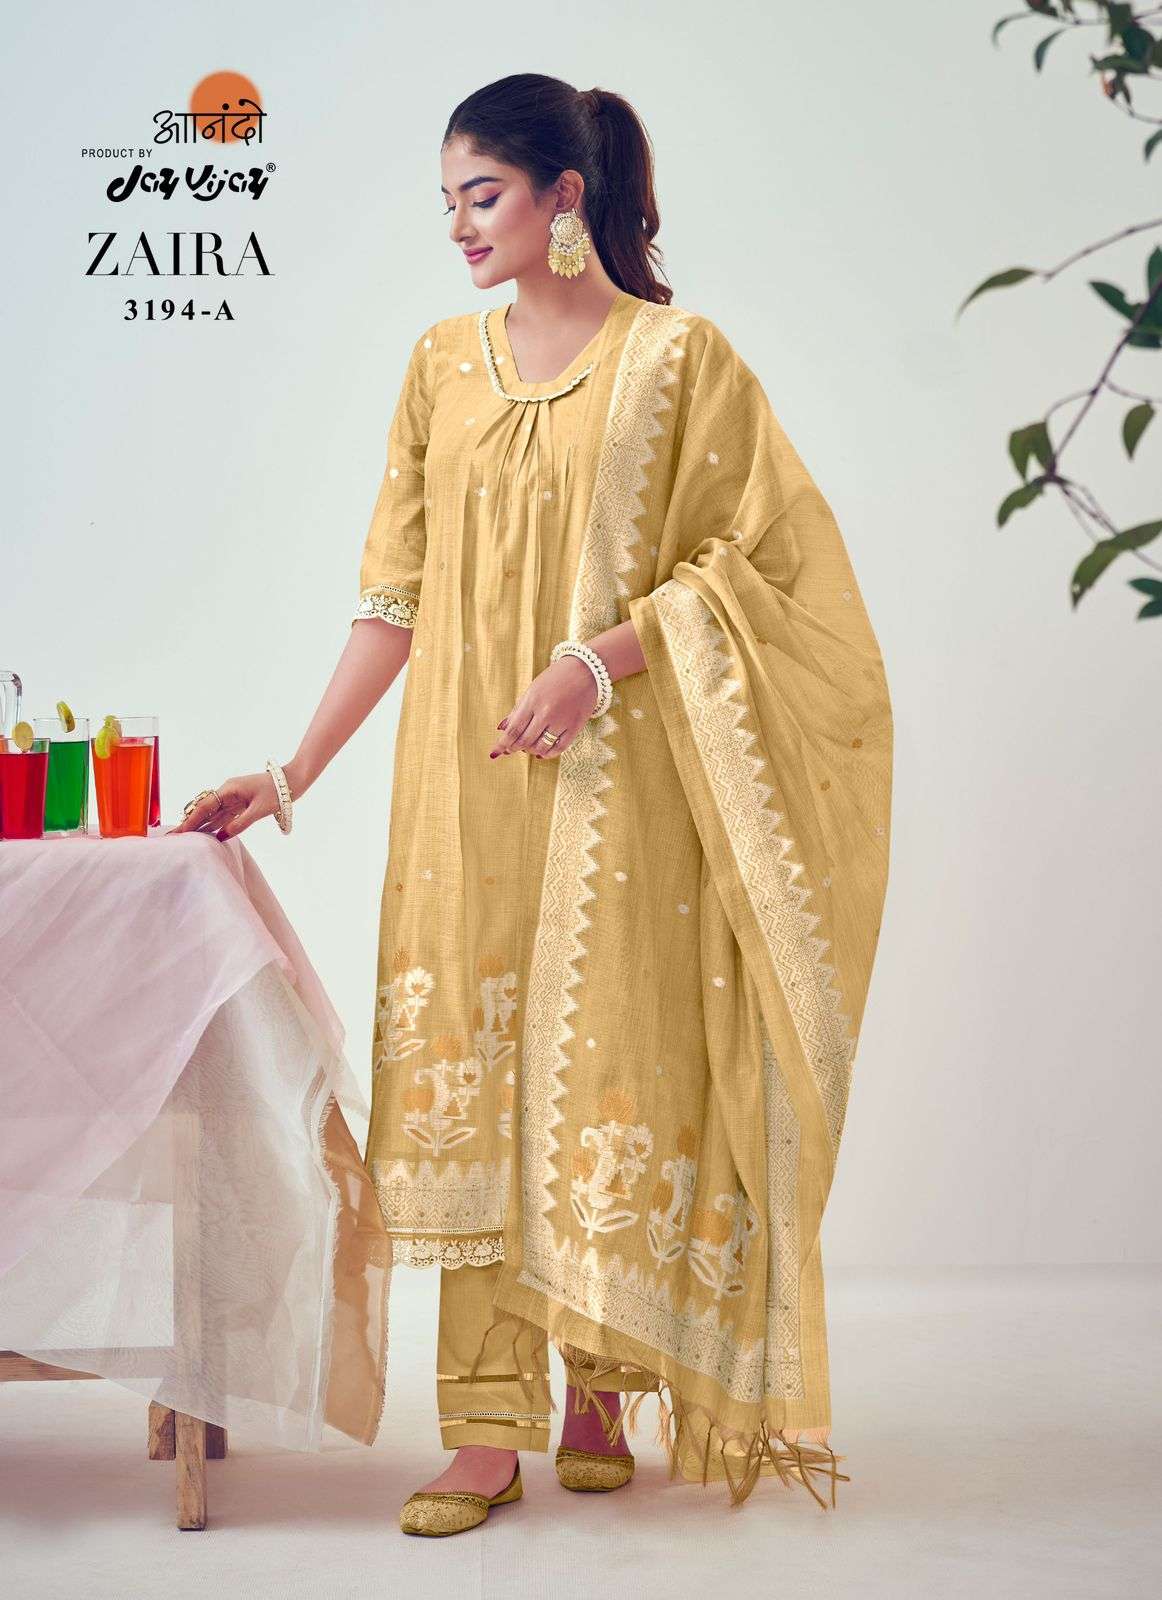 Jay Vijay Anando Zaira 3194 Designer Cotton Suit Latest Catalog Exporters